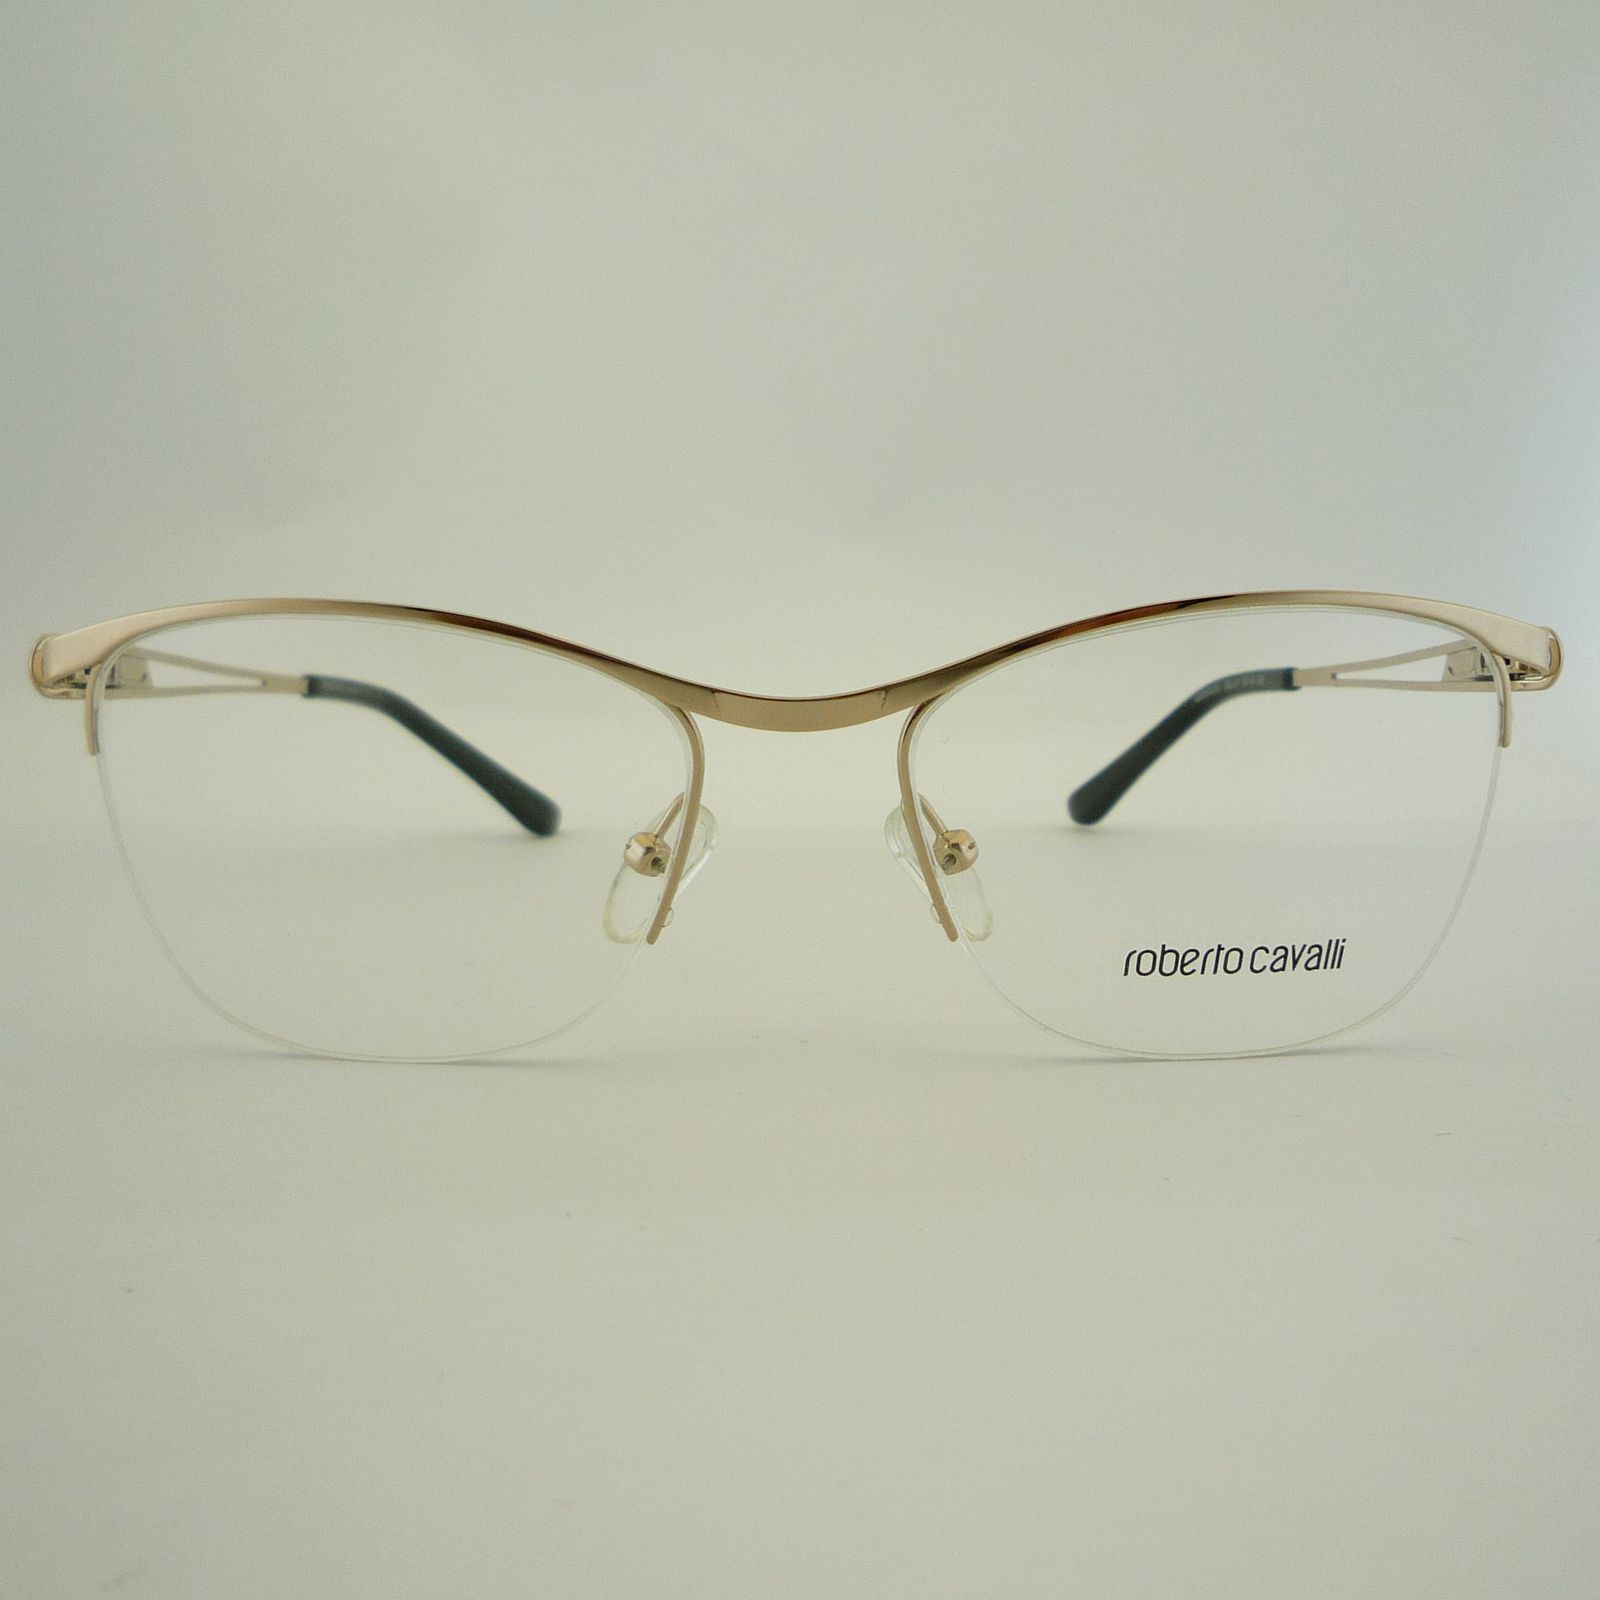 فریم عینک طبی زنانه روبرتو کاوالی مدل 45560223C1 -  - 2